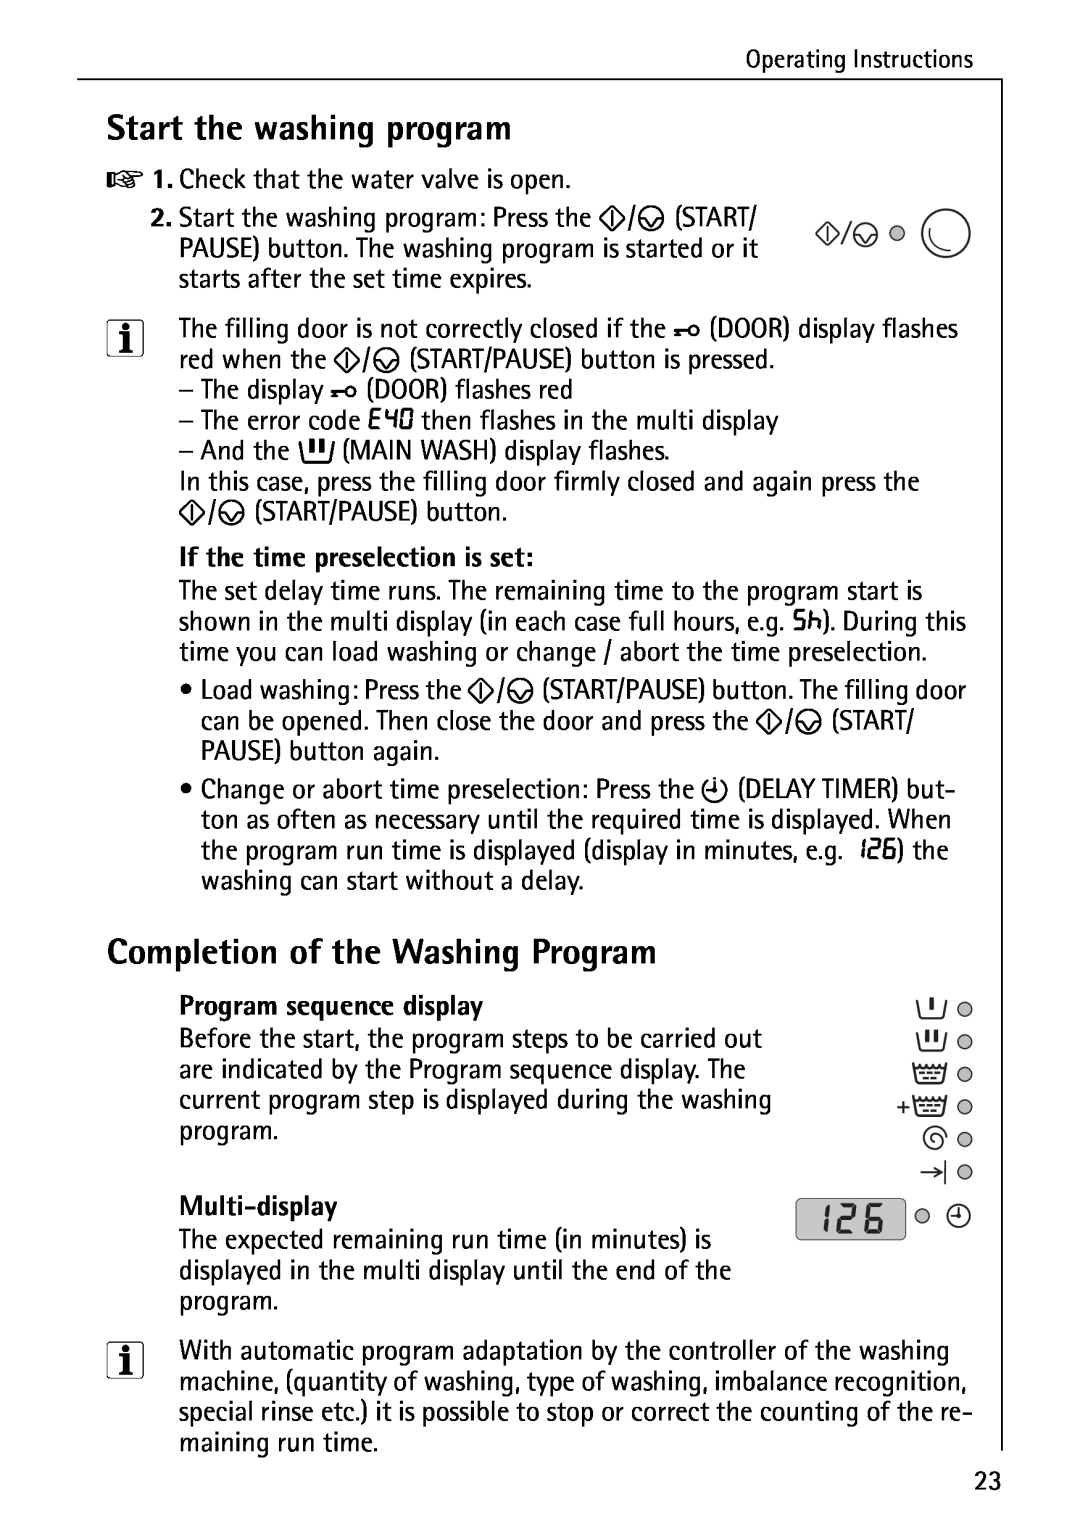 AEG 72640 Start the washing program, Completion of the Washing Program, If the time preselection is set, Multi-display 